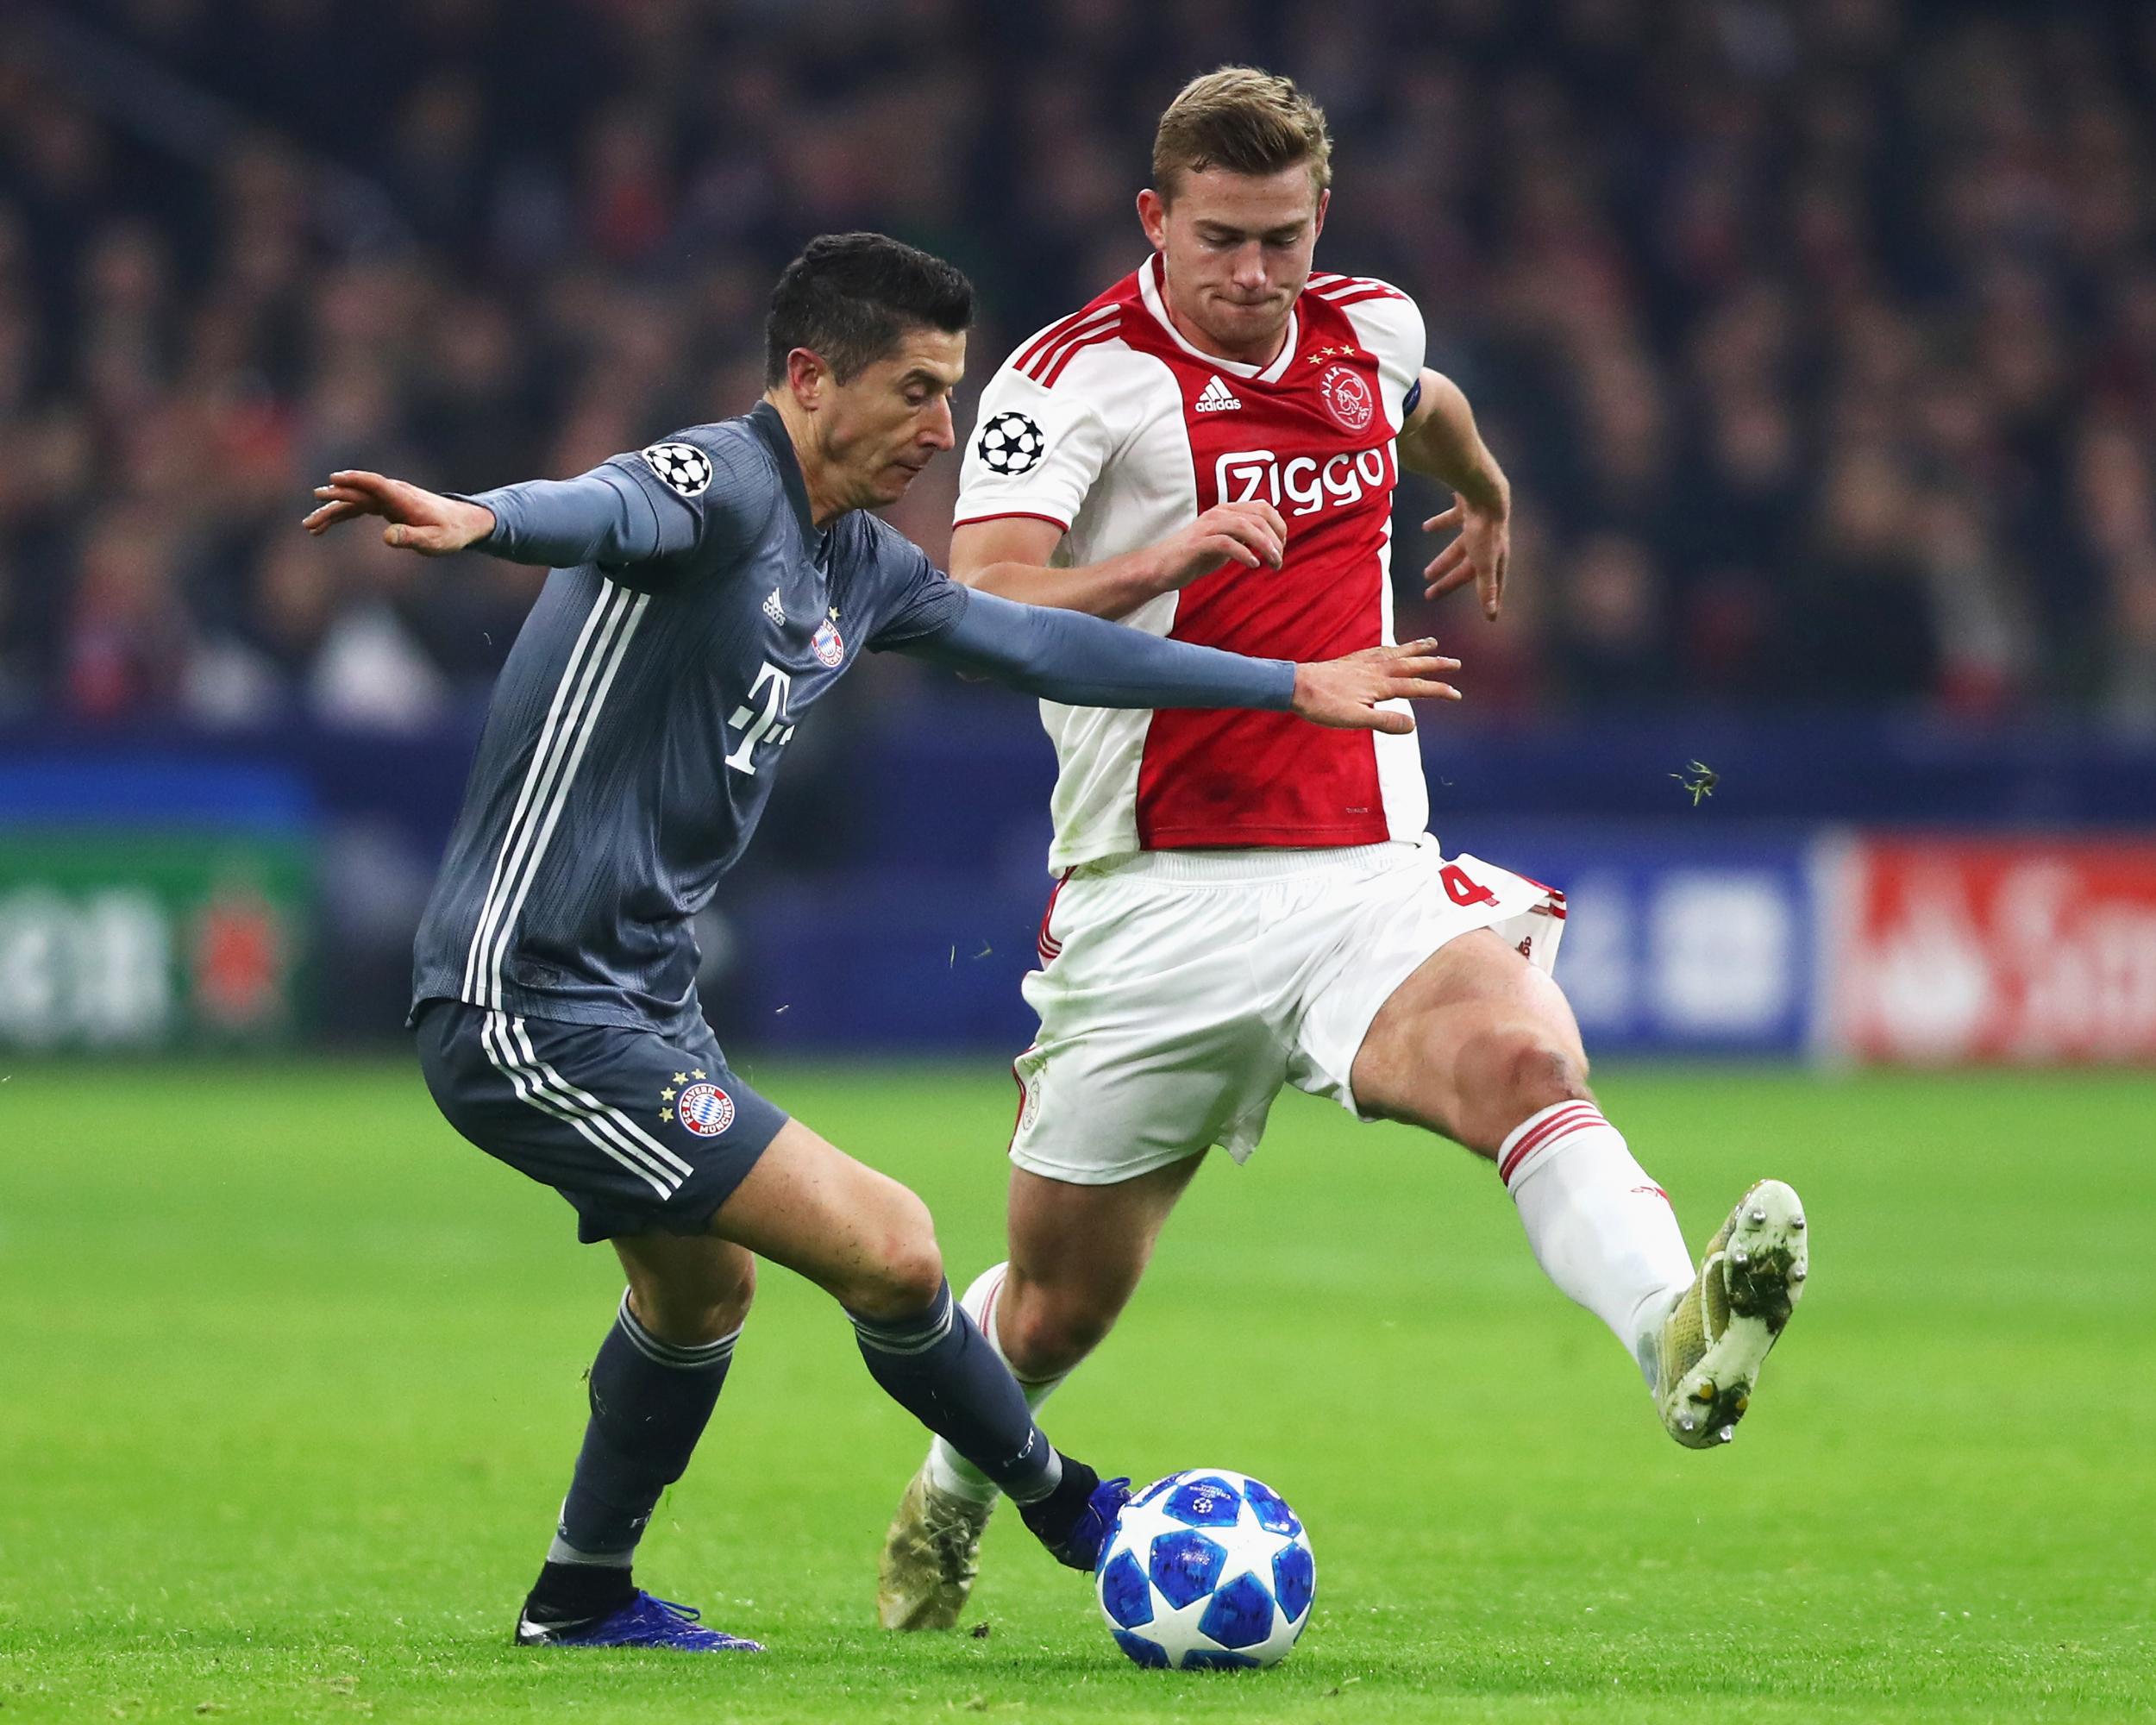 The Ajax defender joins an illustrious list of winners